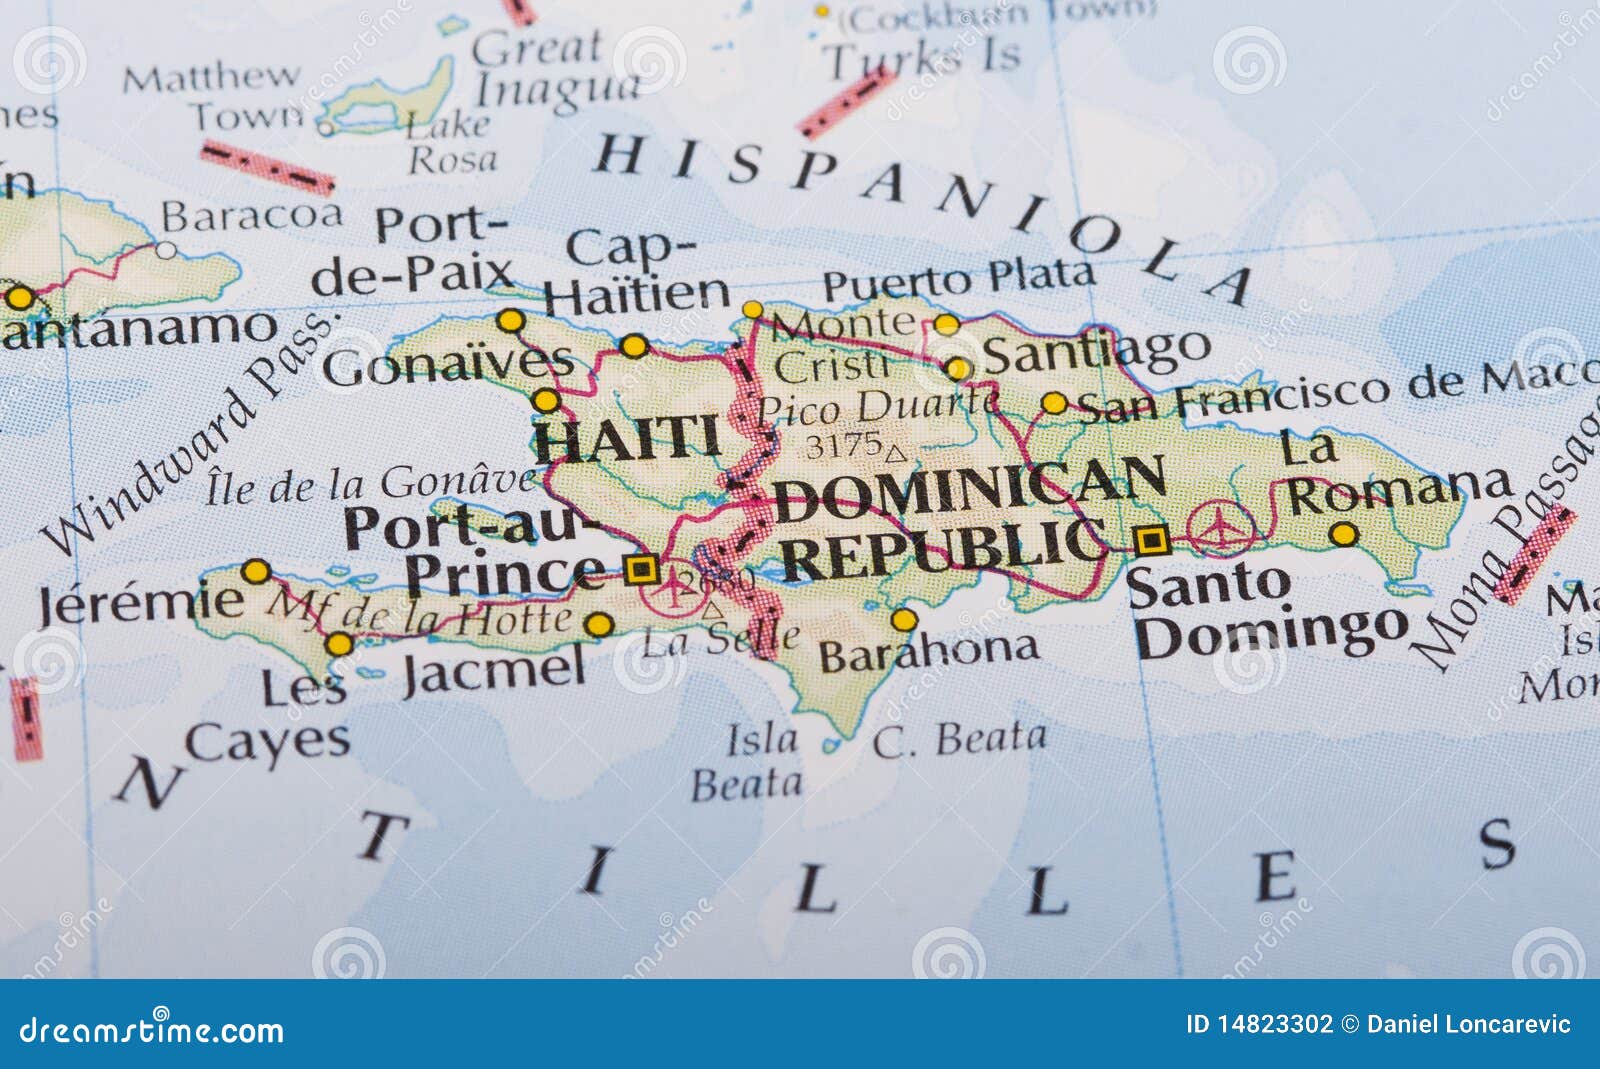 haiti and dominican republic map